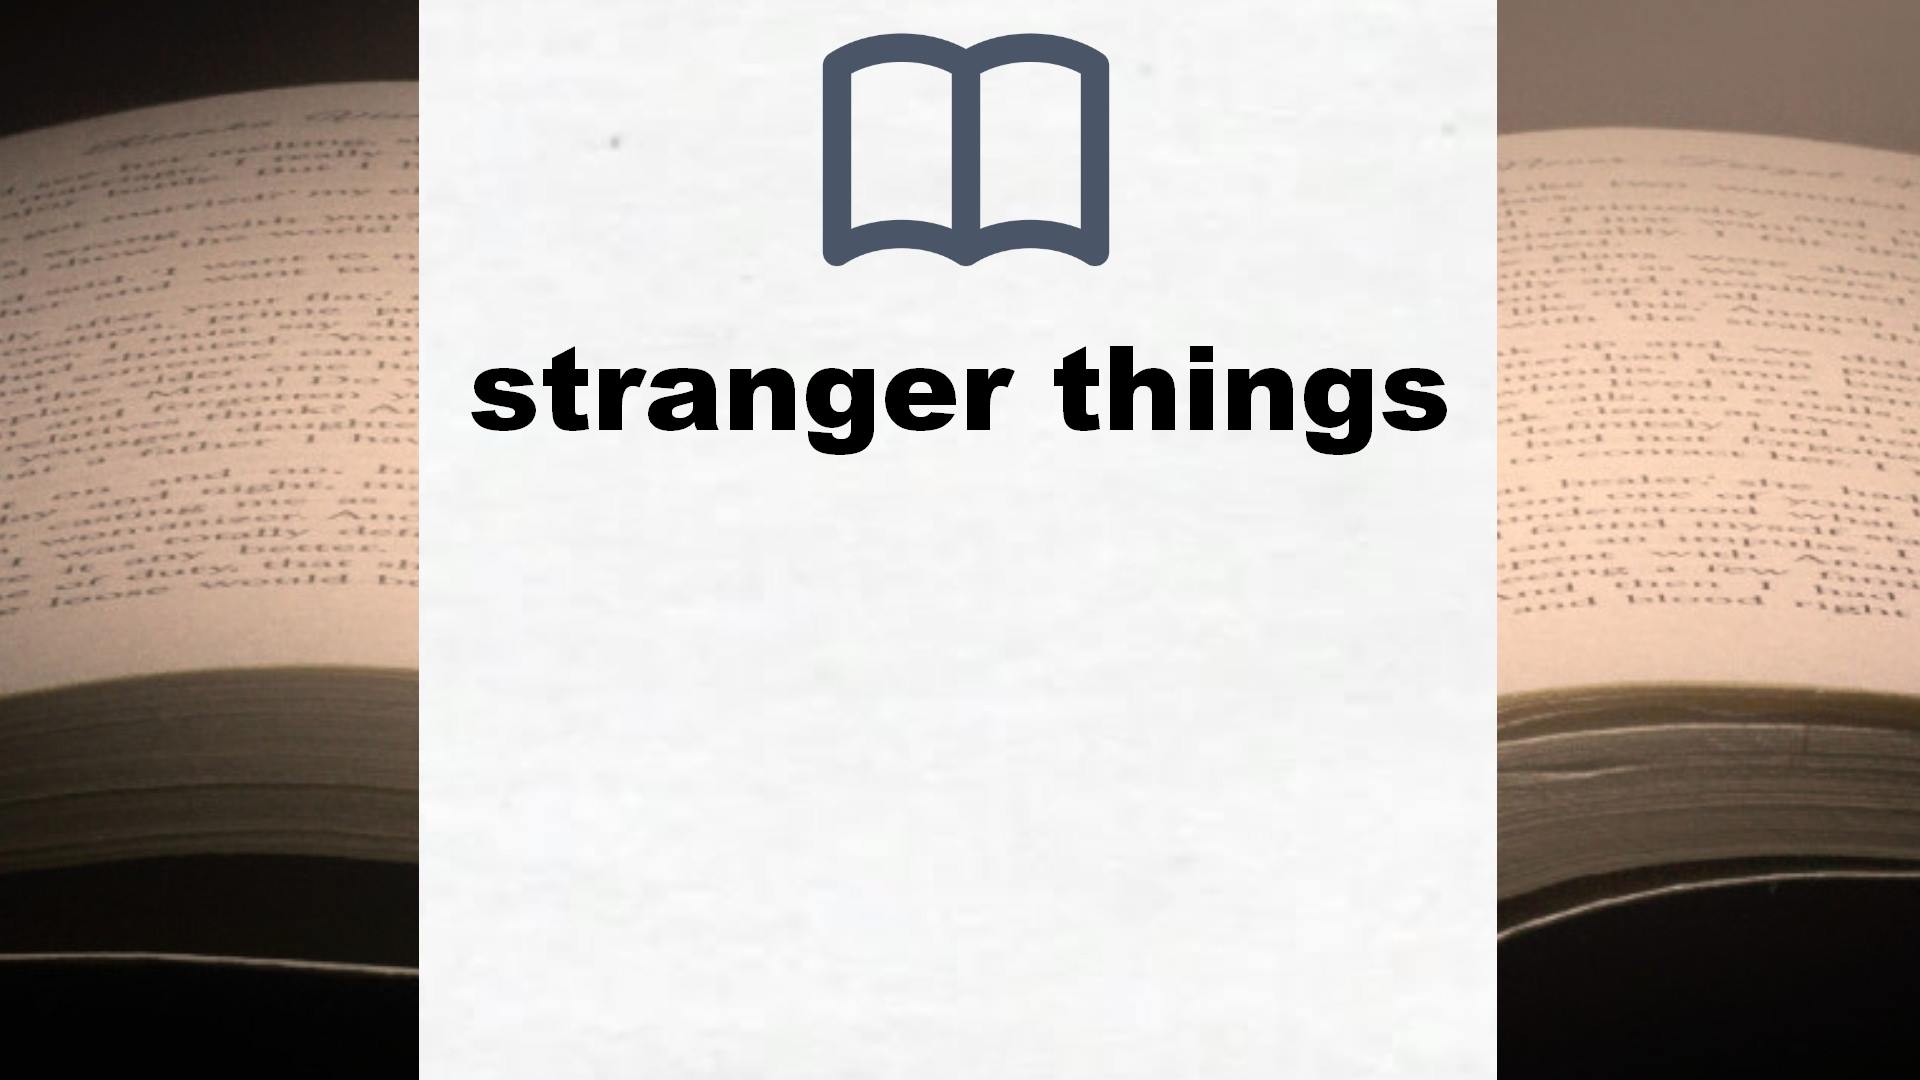 Libros sobre stranger things